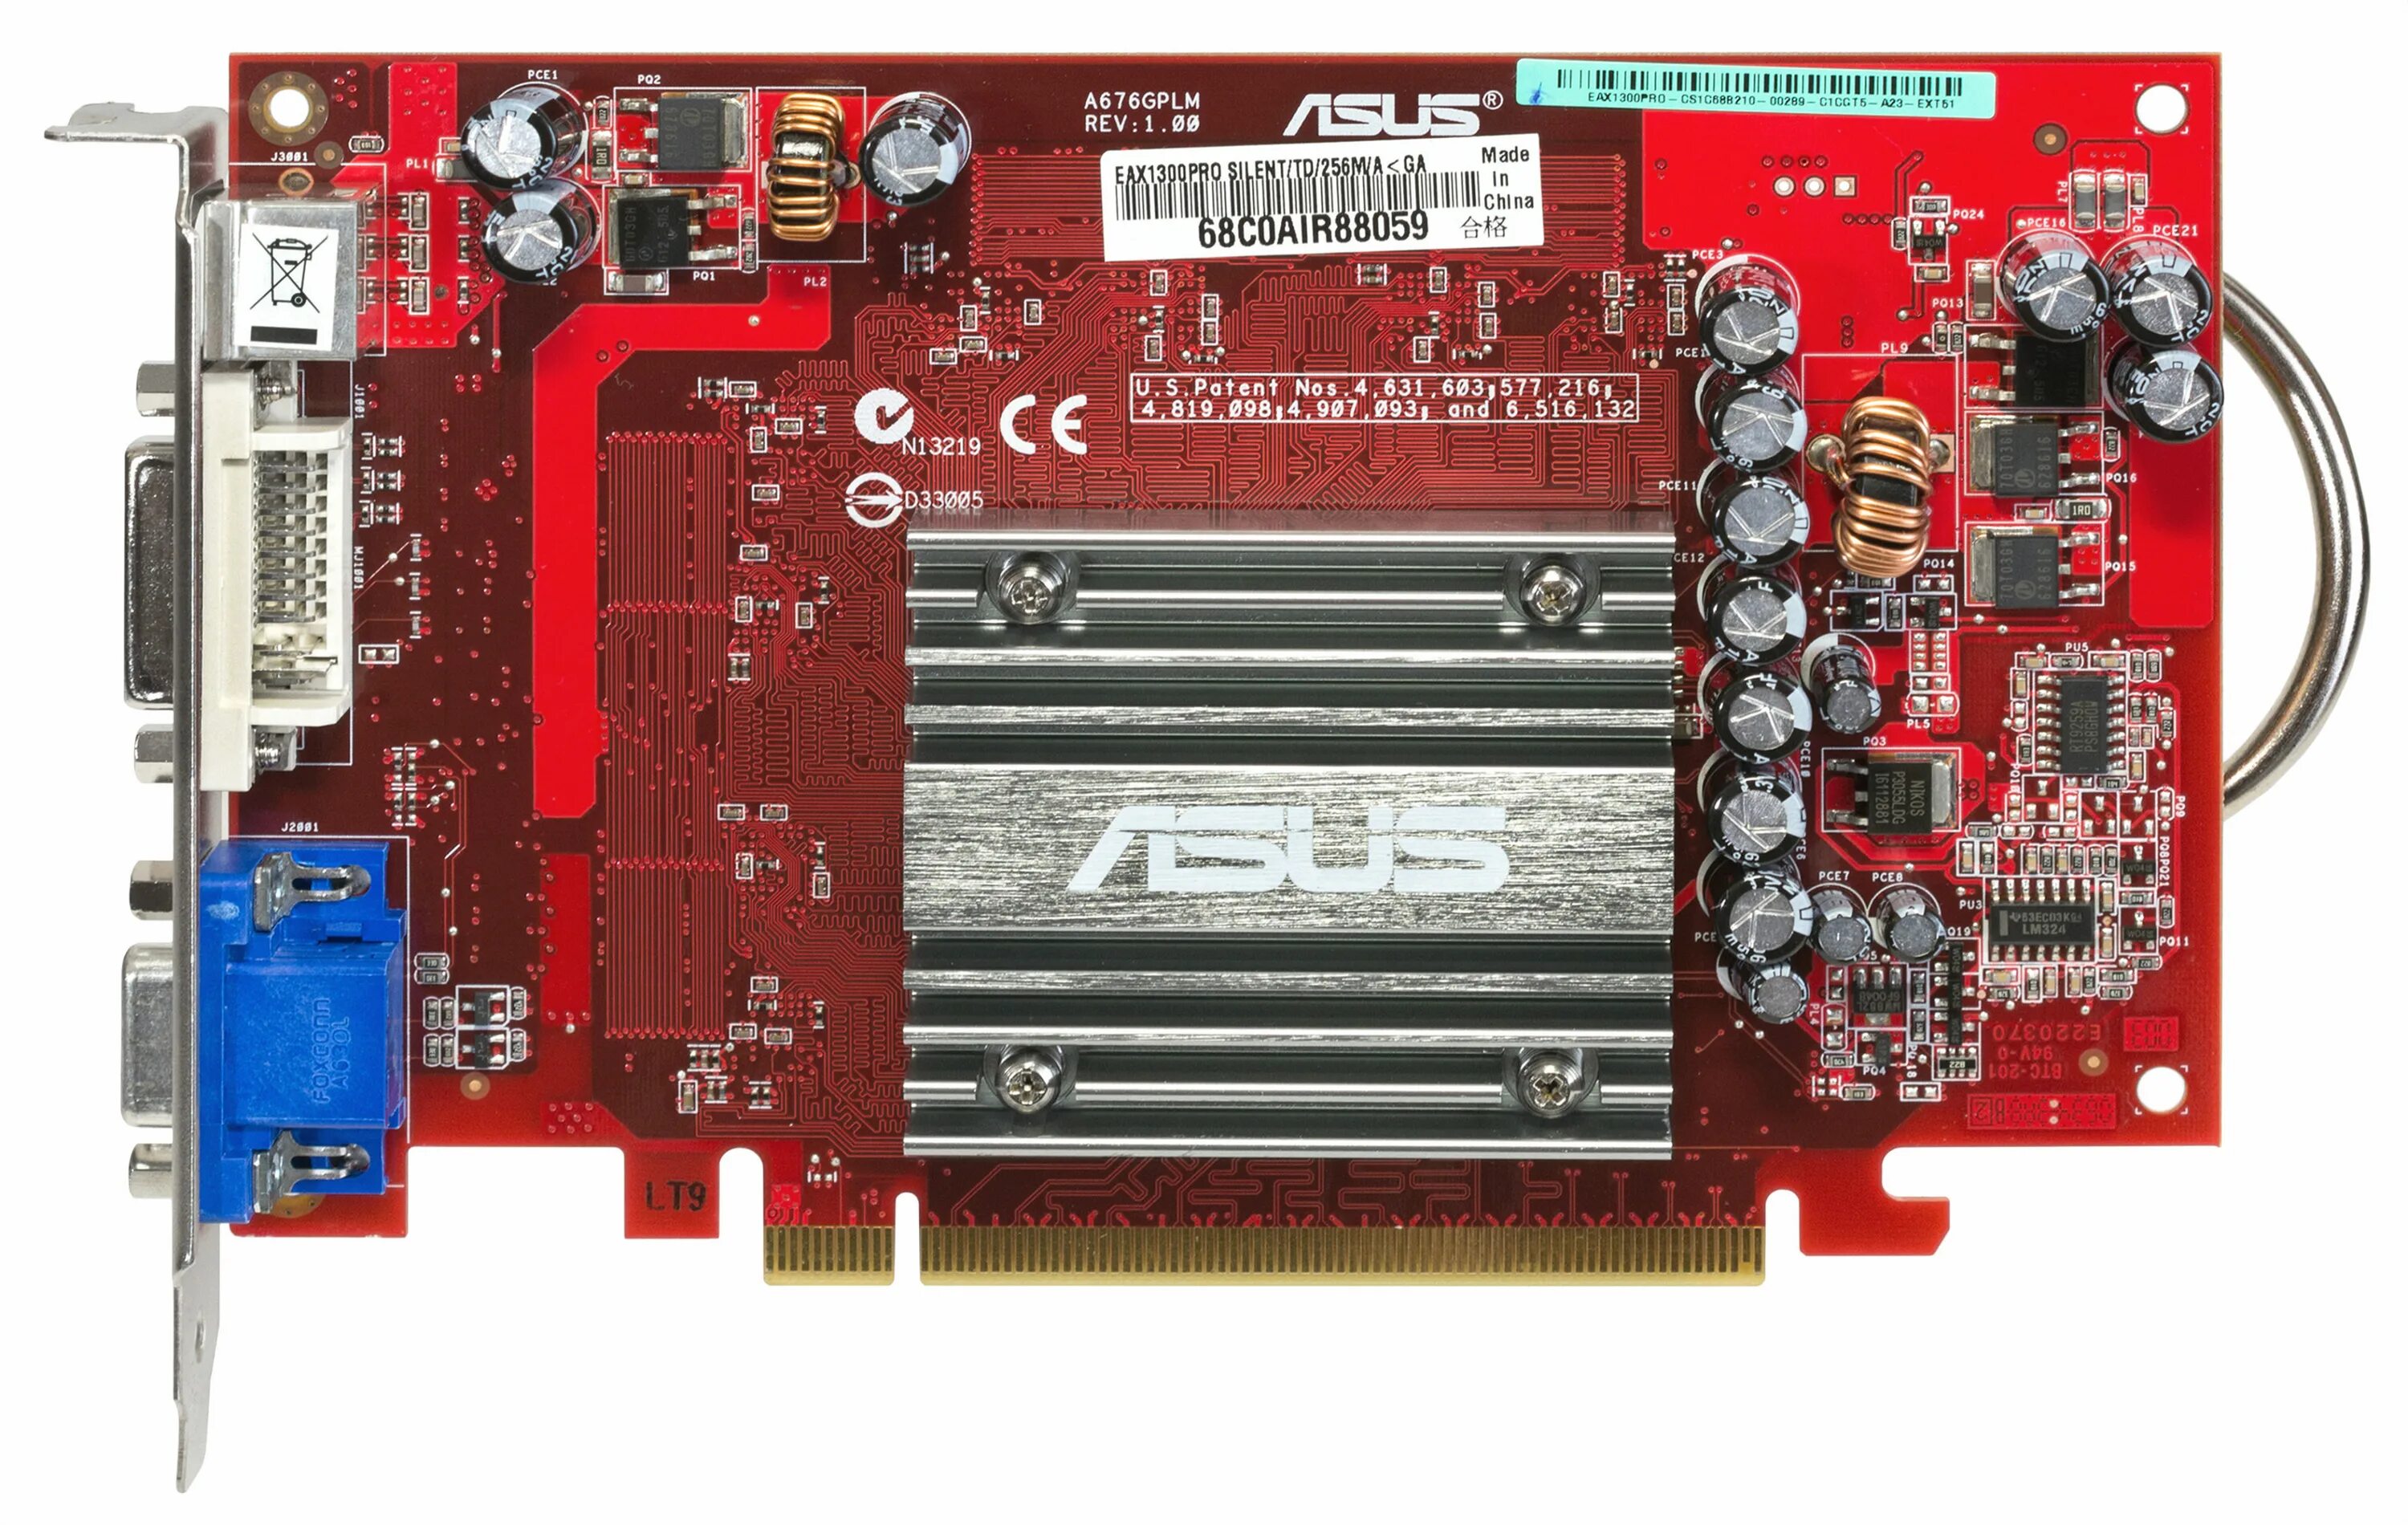 Ati radeon x1300. Видеокарта ASUS eax1300pro. Видеокарта Radeon x1300 Pro. Видеокарта ATI Radeon x1300. Видеокарта ASUS Rev 1.00.